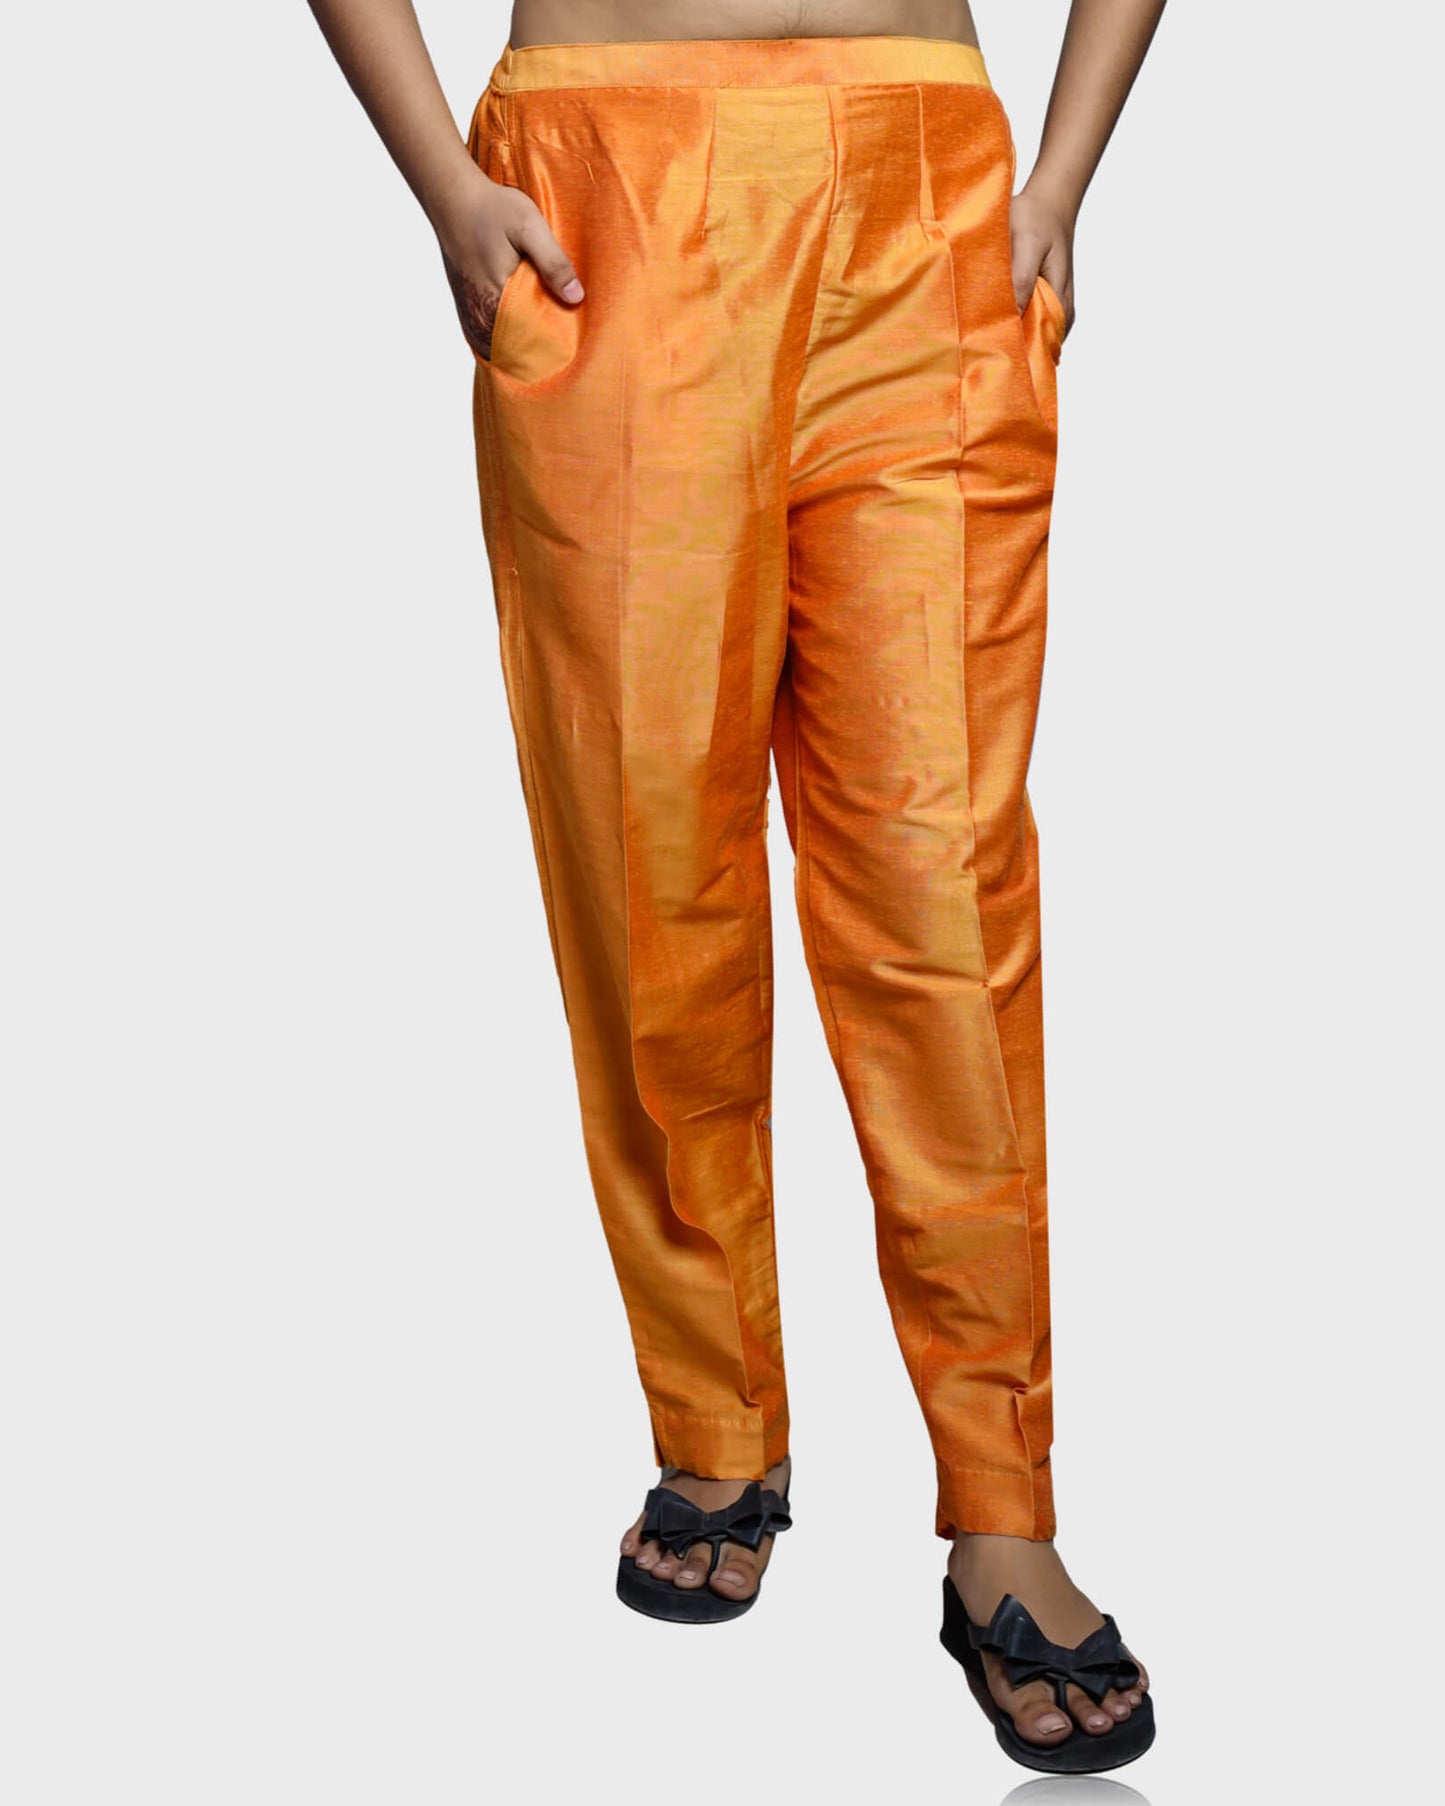 Silkfab Women's Banarasi Silk Orange Gold Solid Kurti Pant Set - SILKFAB